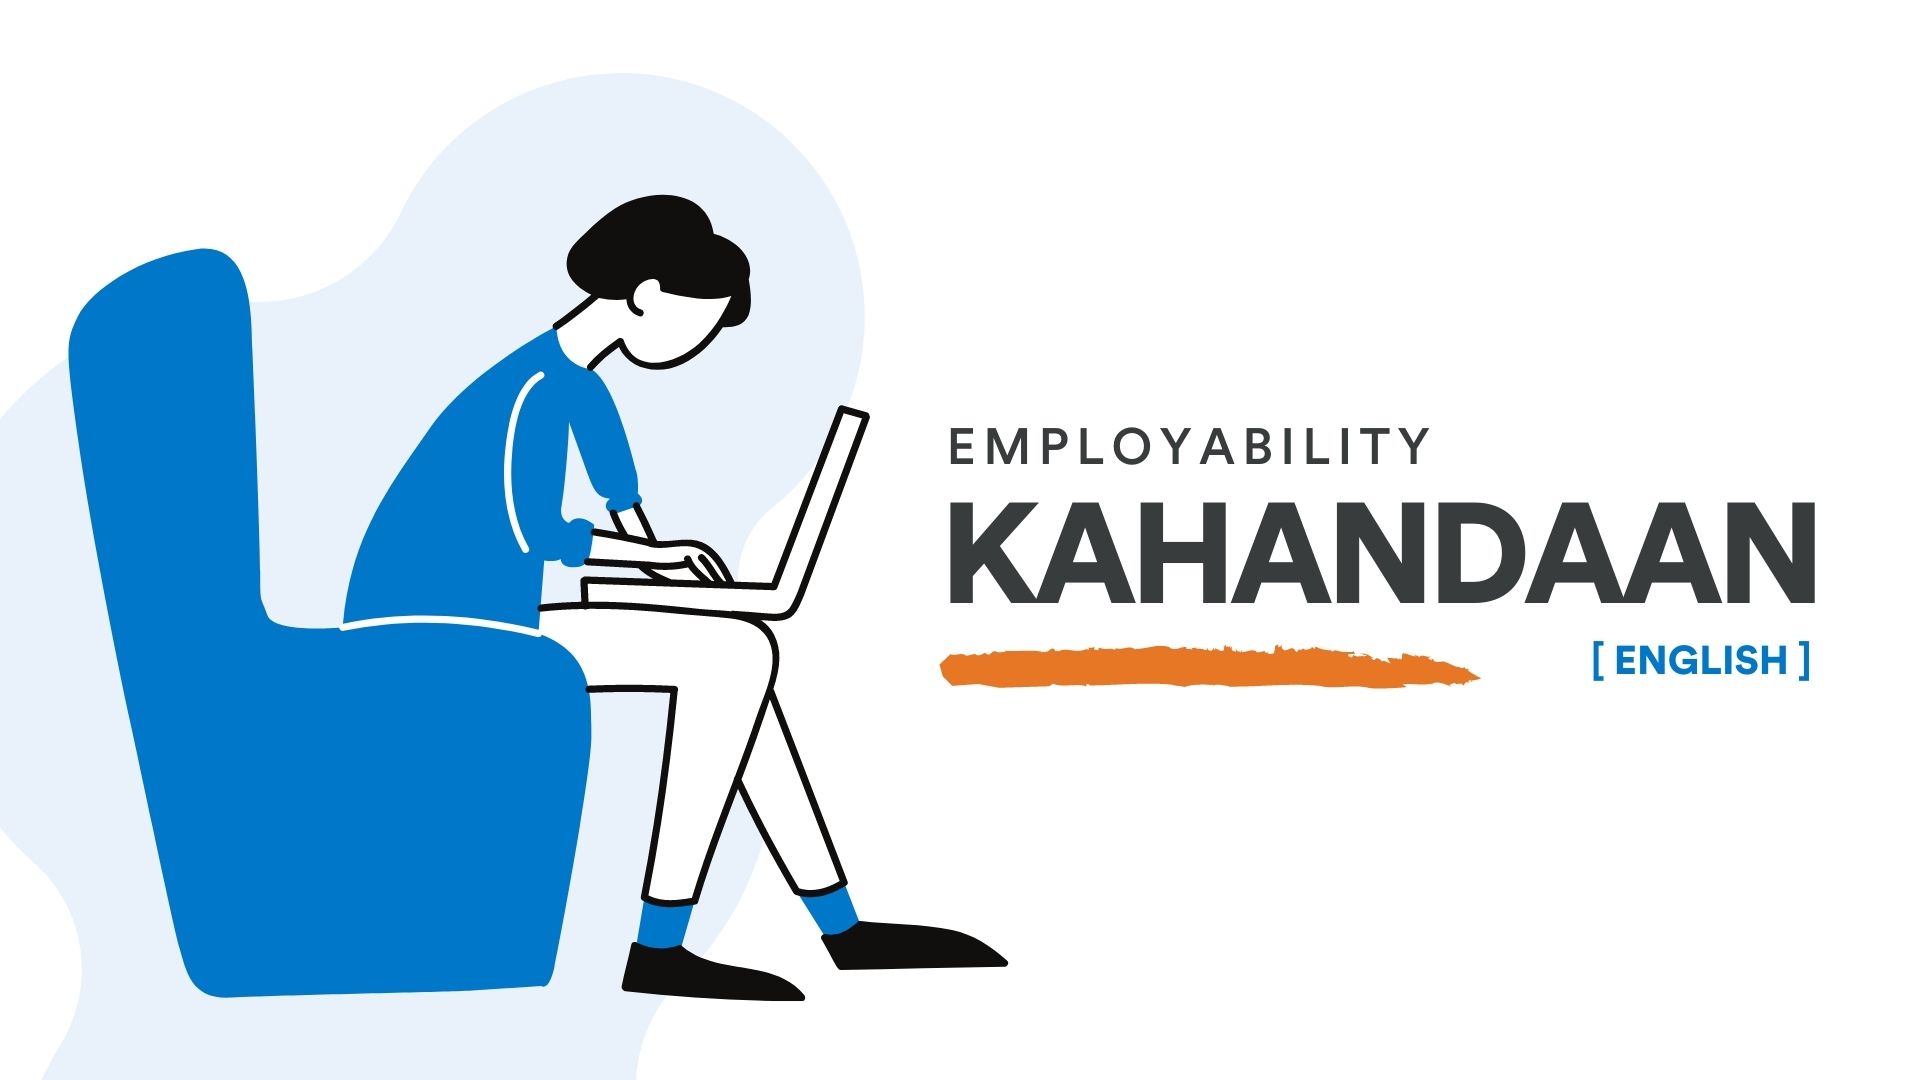 Kahandaan: Employability [English]